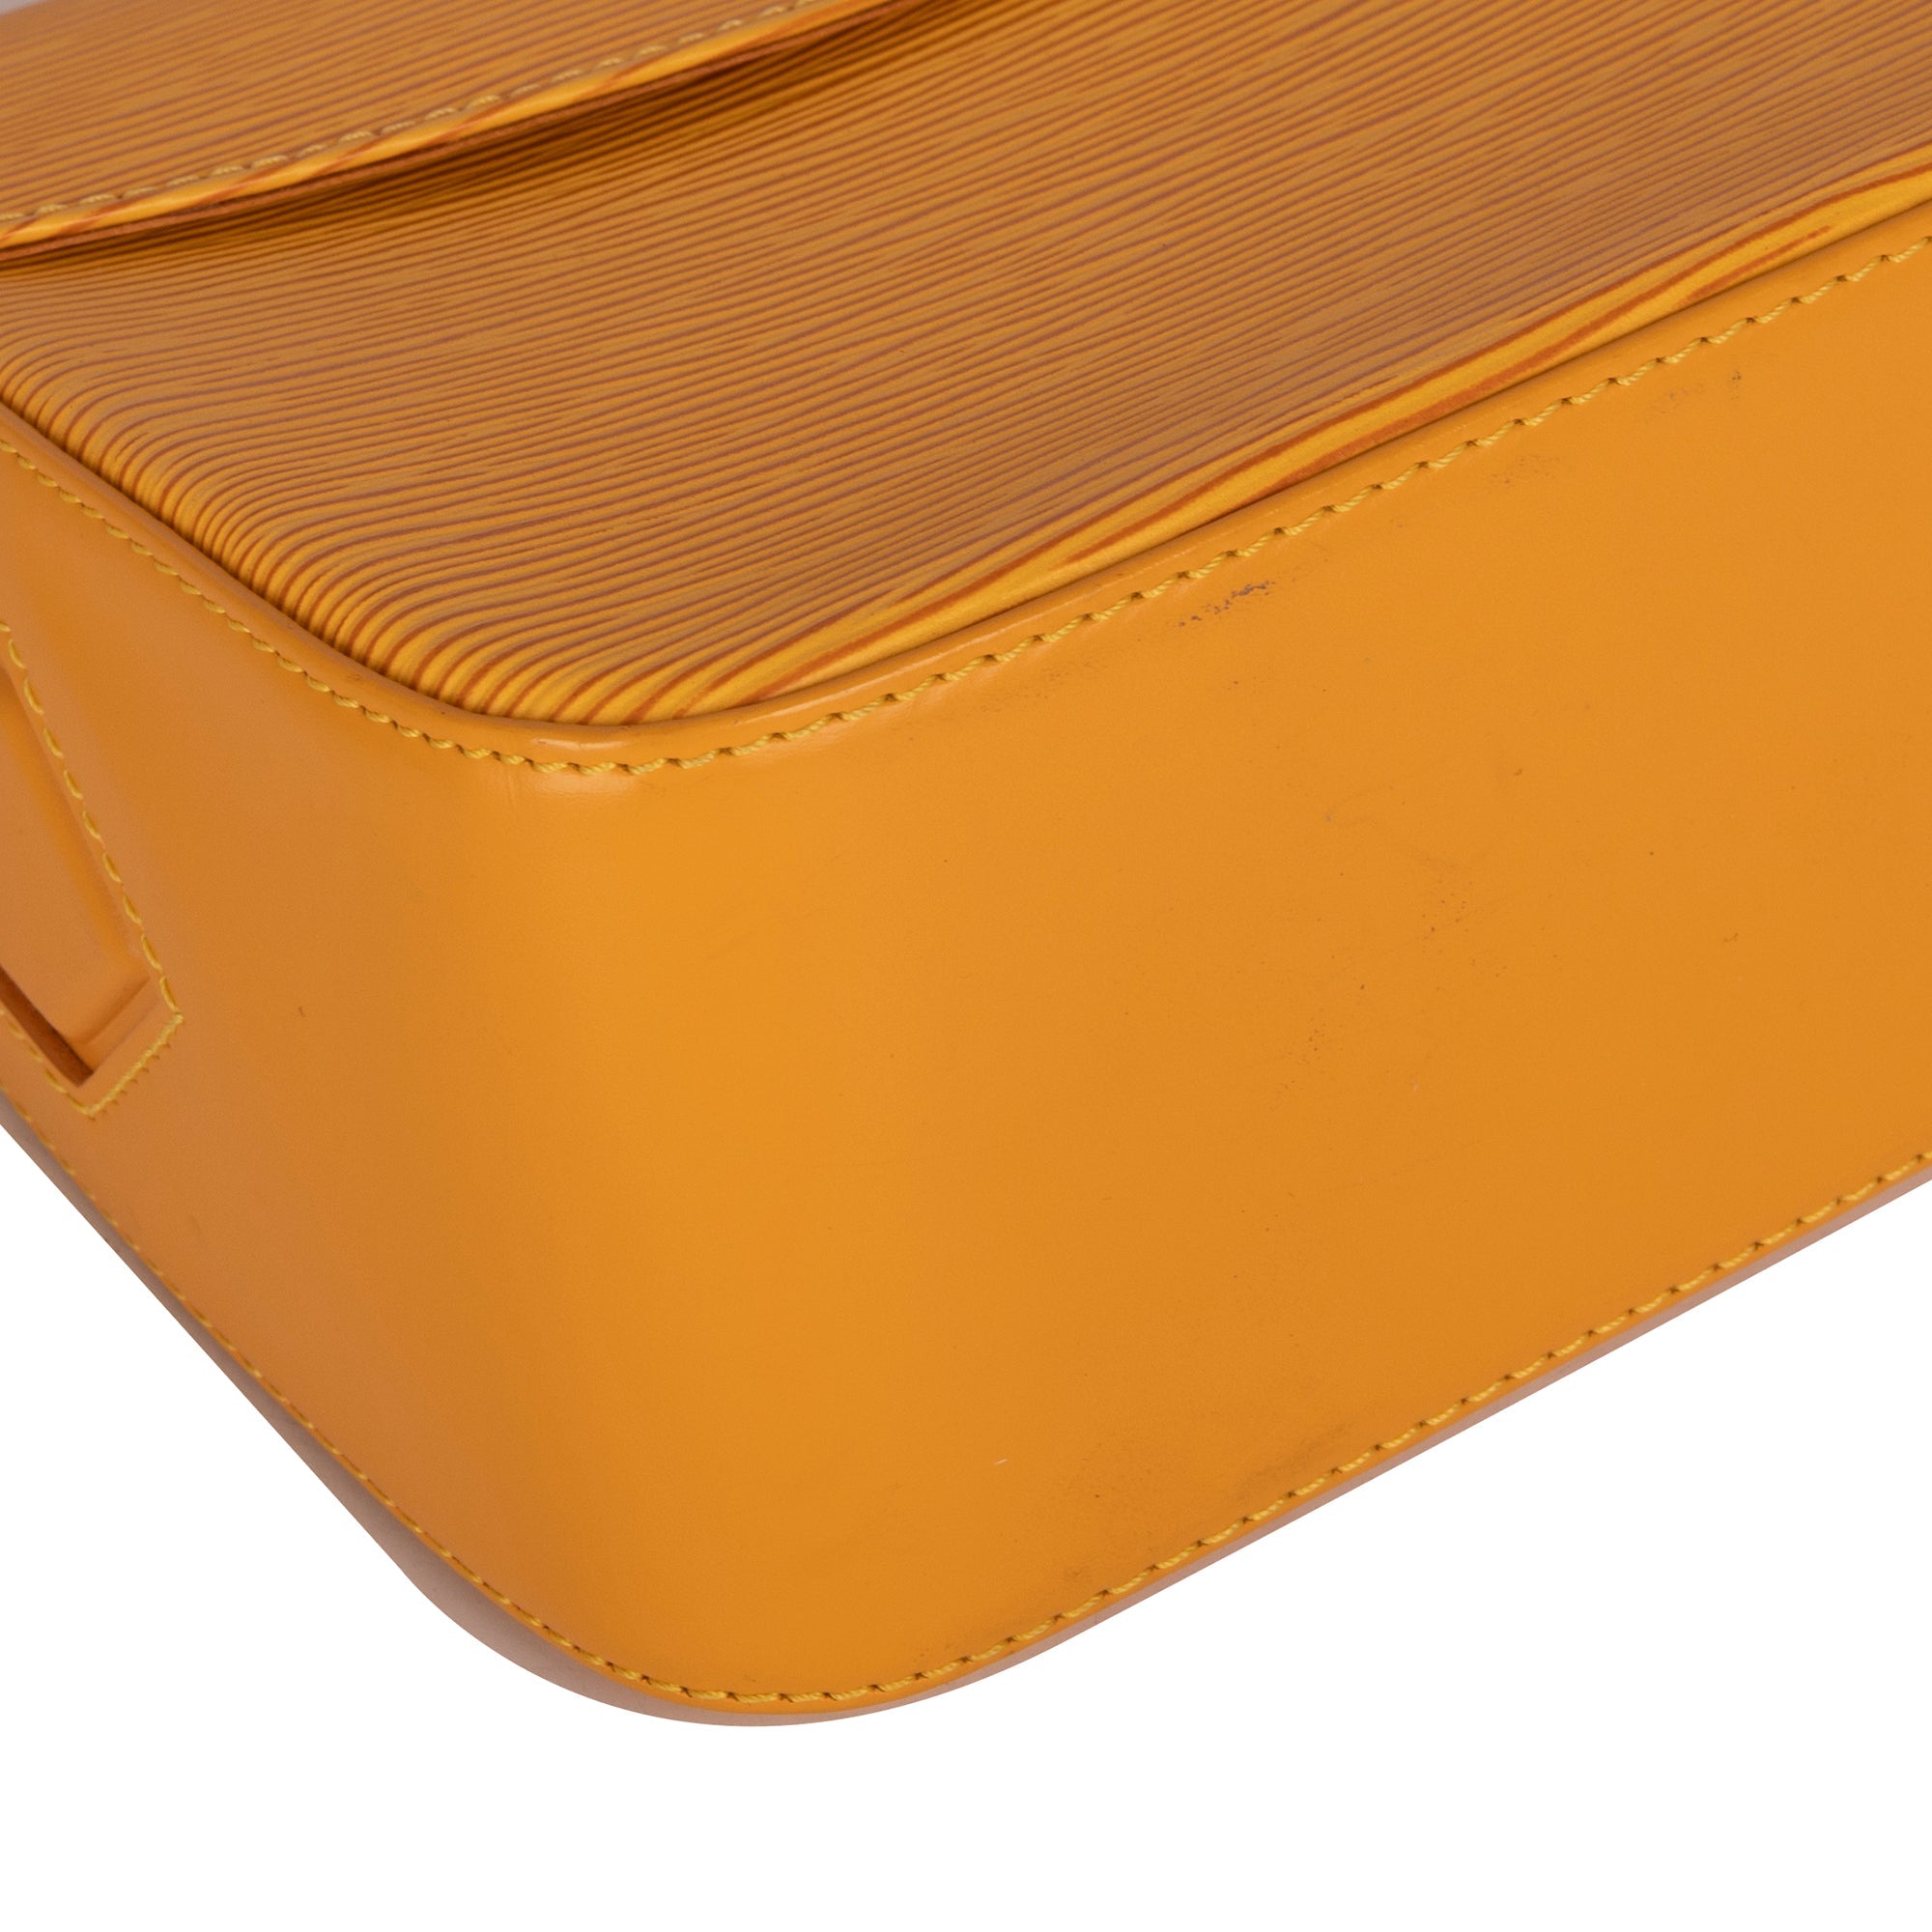 Buci Bag - Luxury Epi Leather Brown